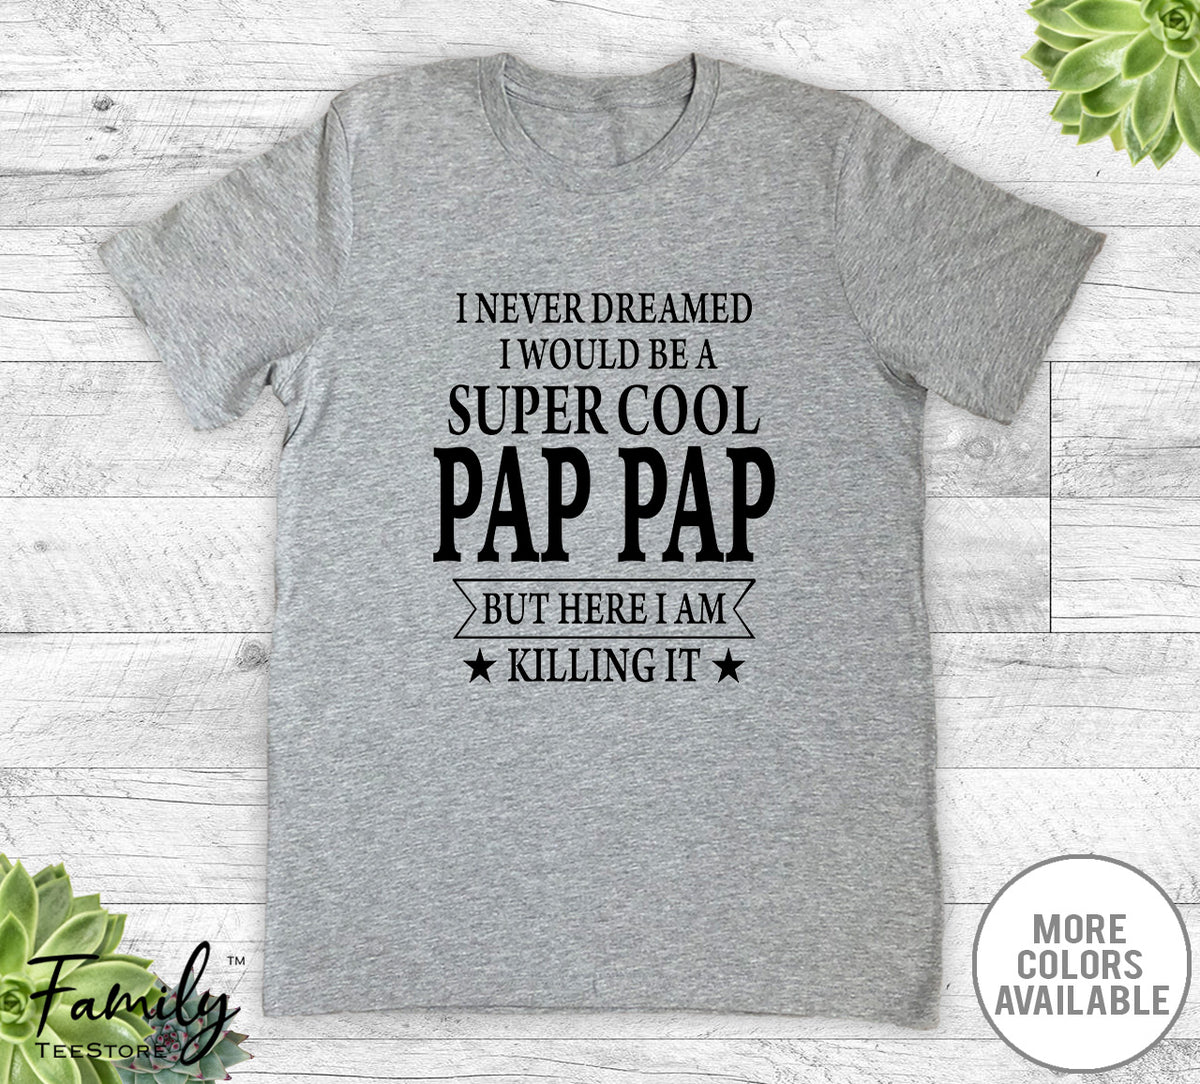 I Never Dreamed I'd Be A Super Cool Pap Pap - Unisex T-shirt - Pap Pap Shirt - Pap Pap Gift